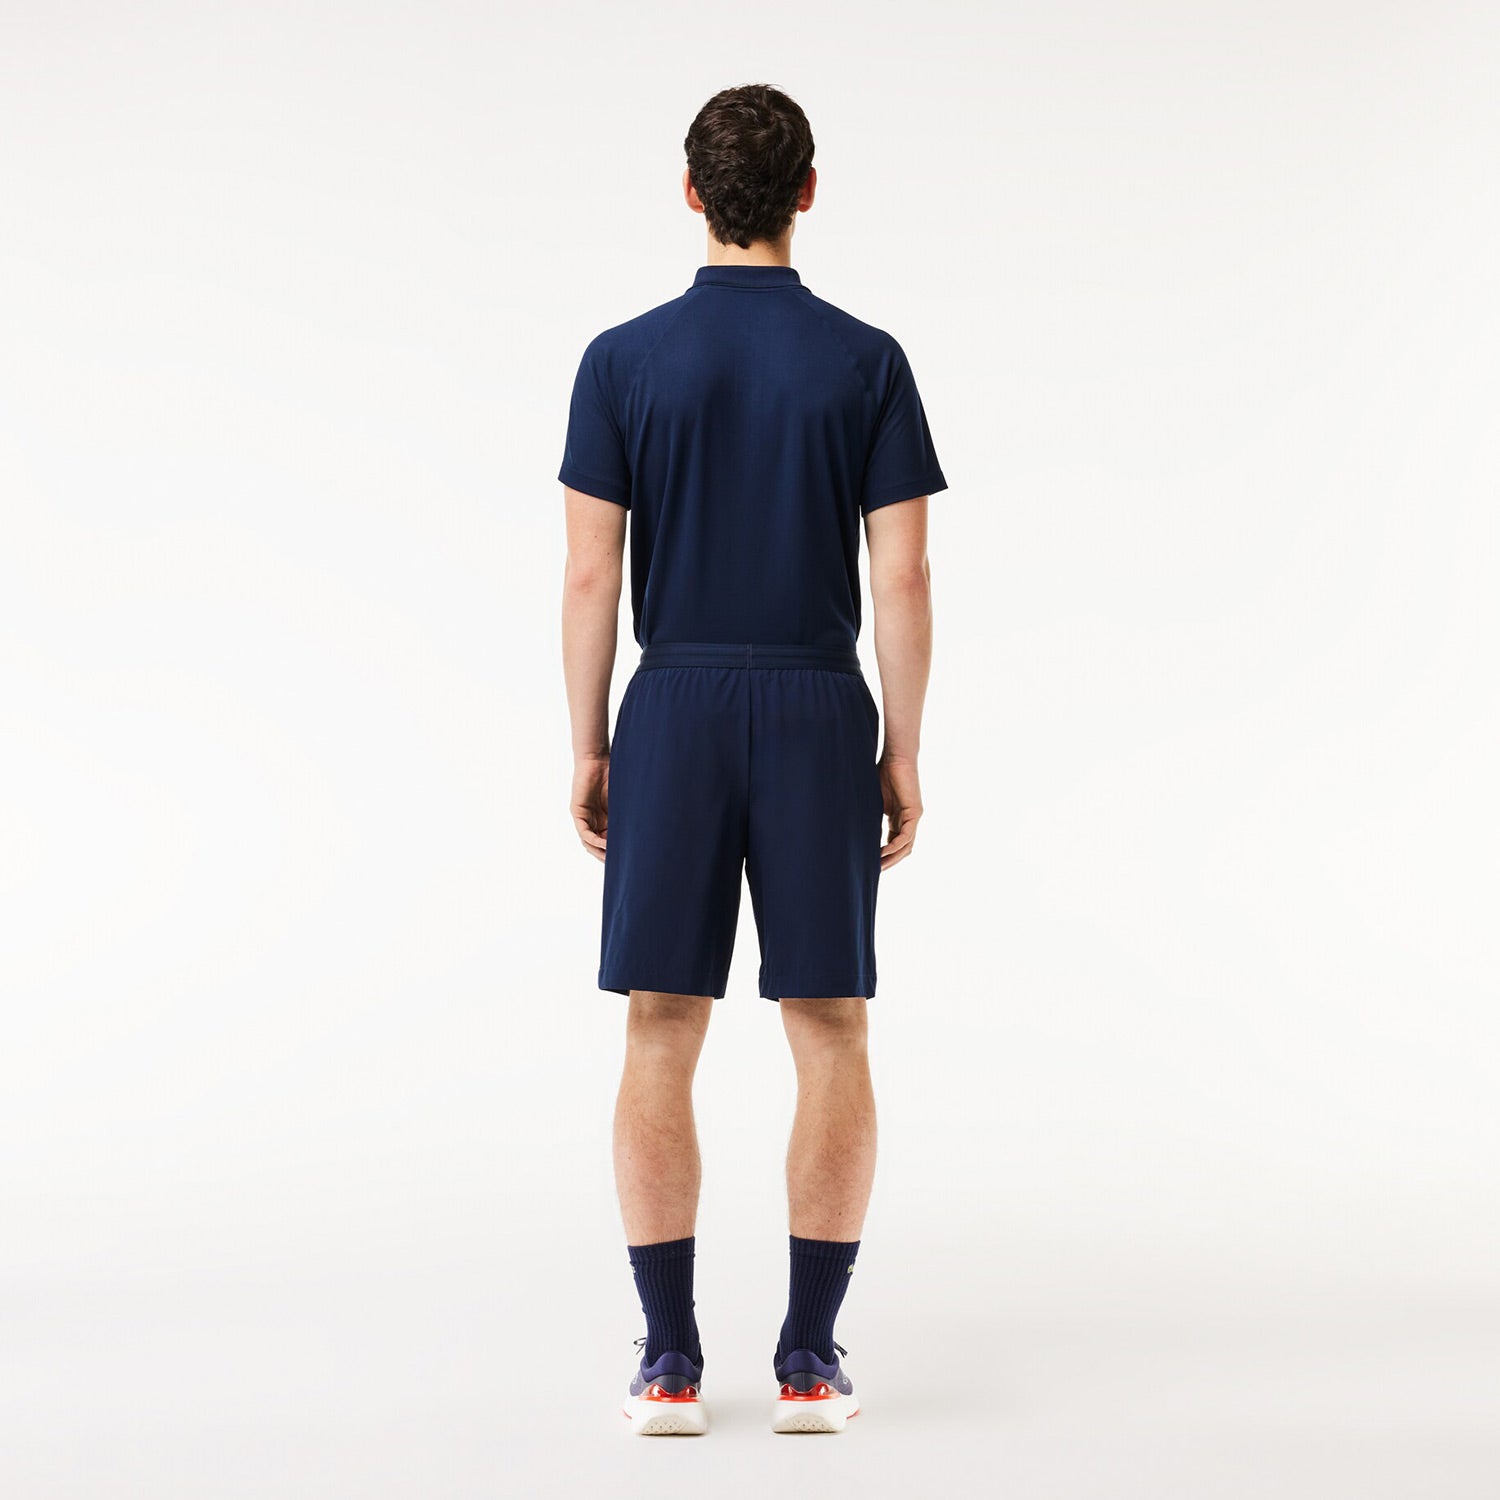 Lacoste Men's Technical Woven Tennis Shorts - Dark Blue (2)